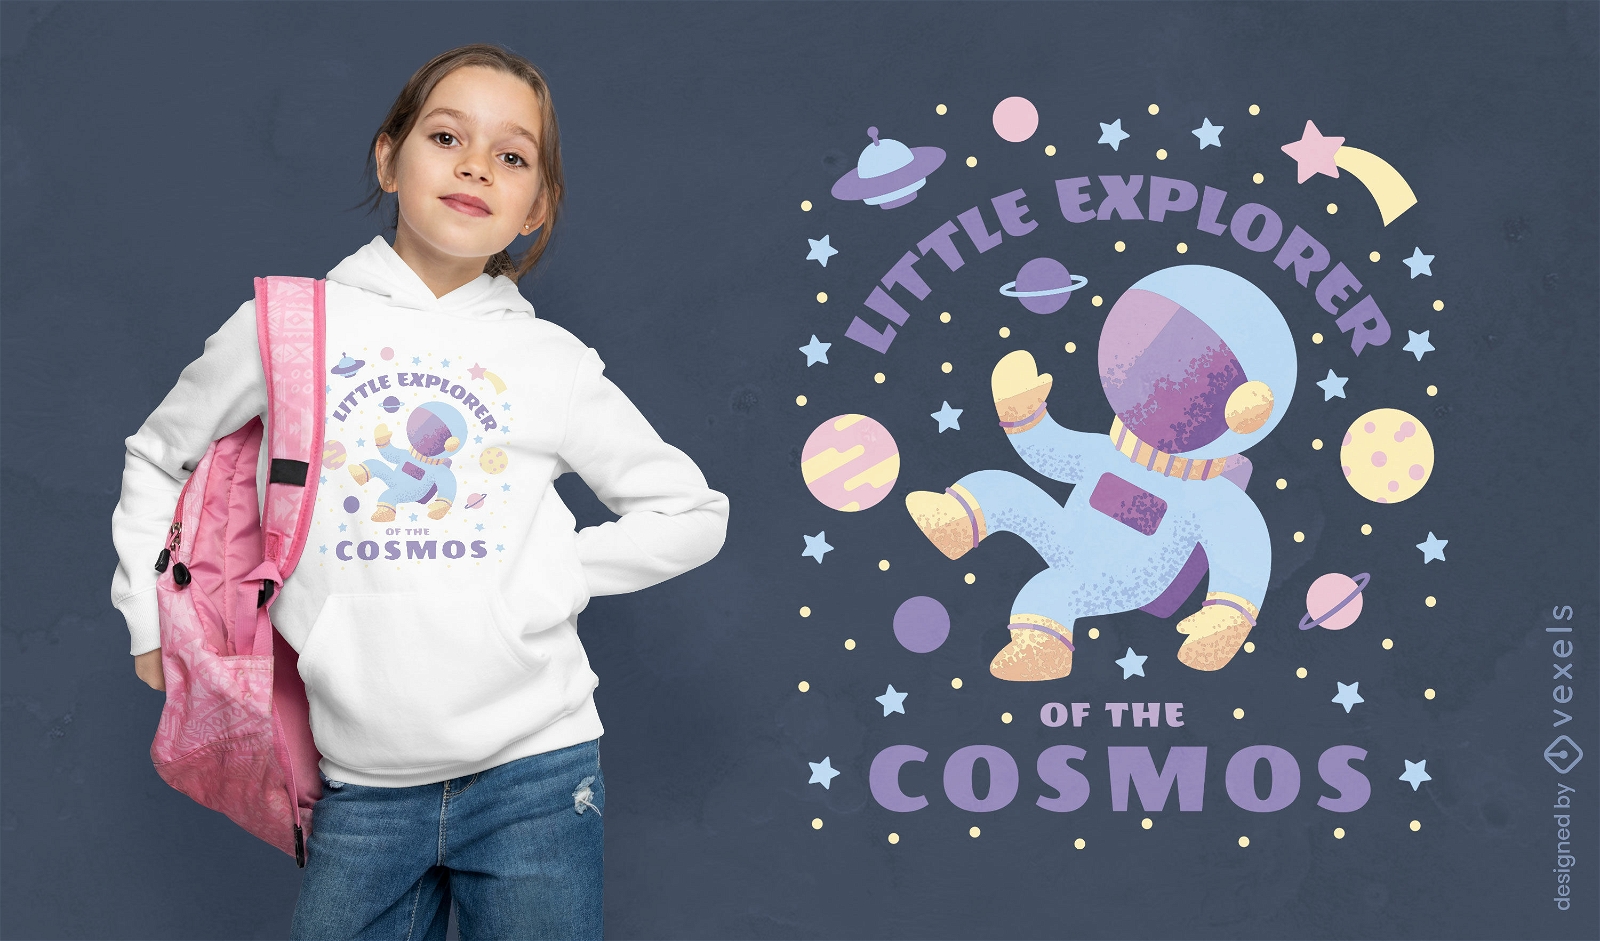 Design de camiseta do pequeno explorador cósmico